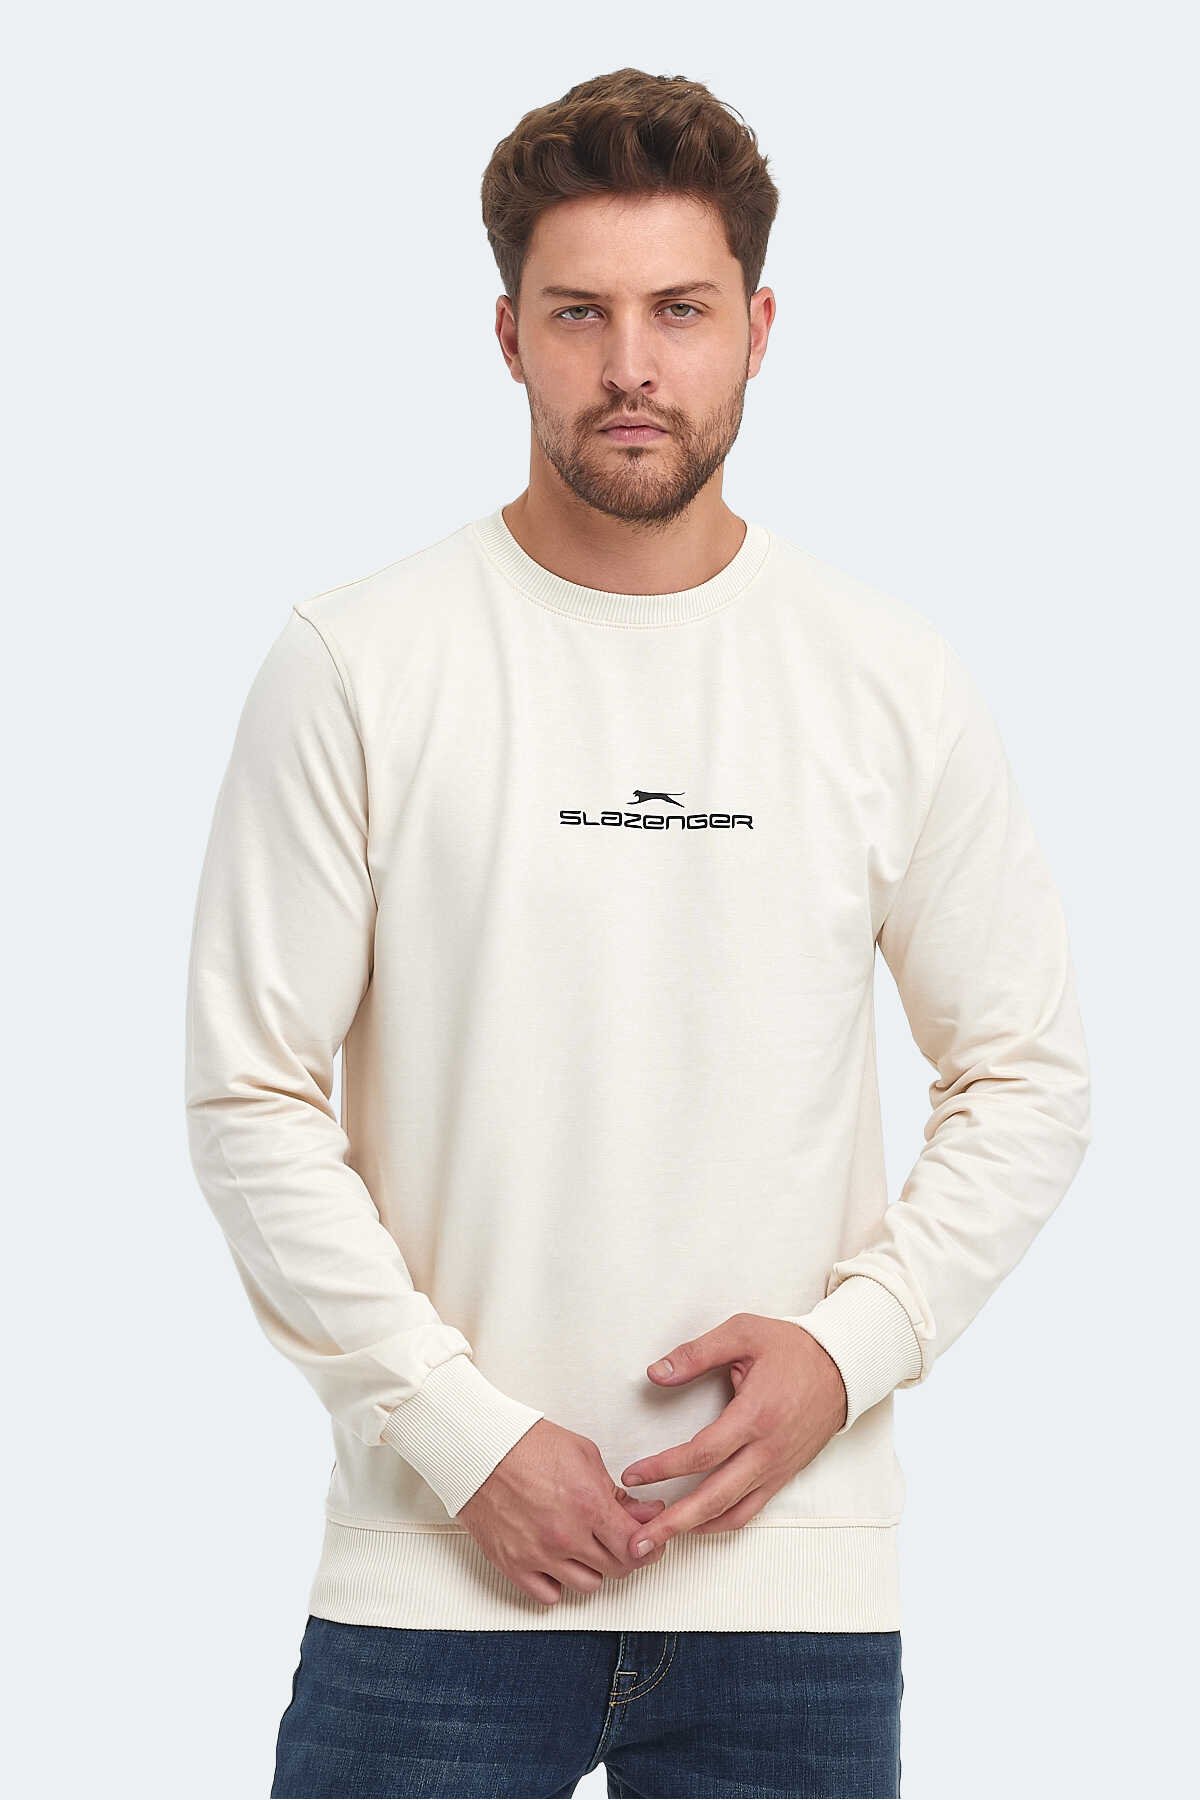 Slazenger - Slazenger ORTWIN IN Erkek Sweatshirt Bej